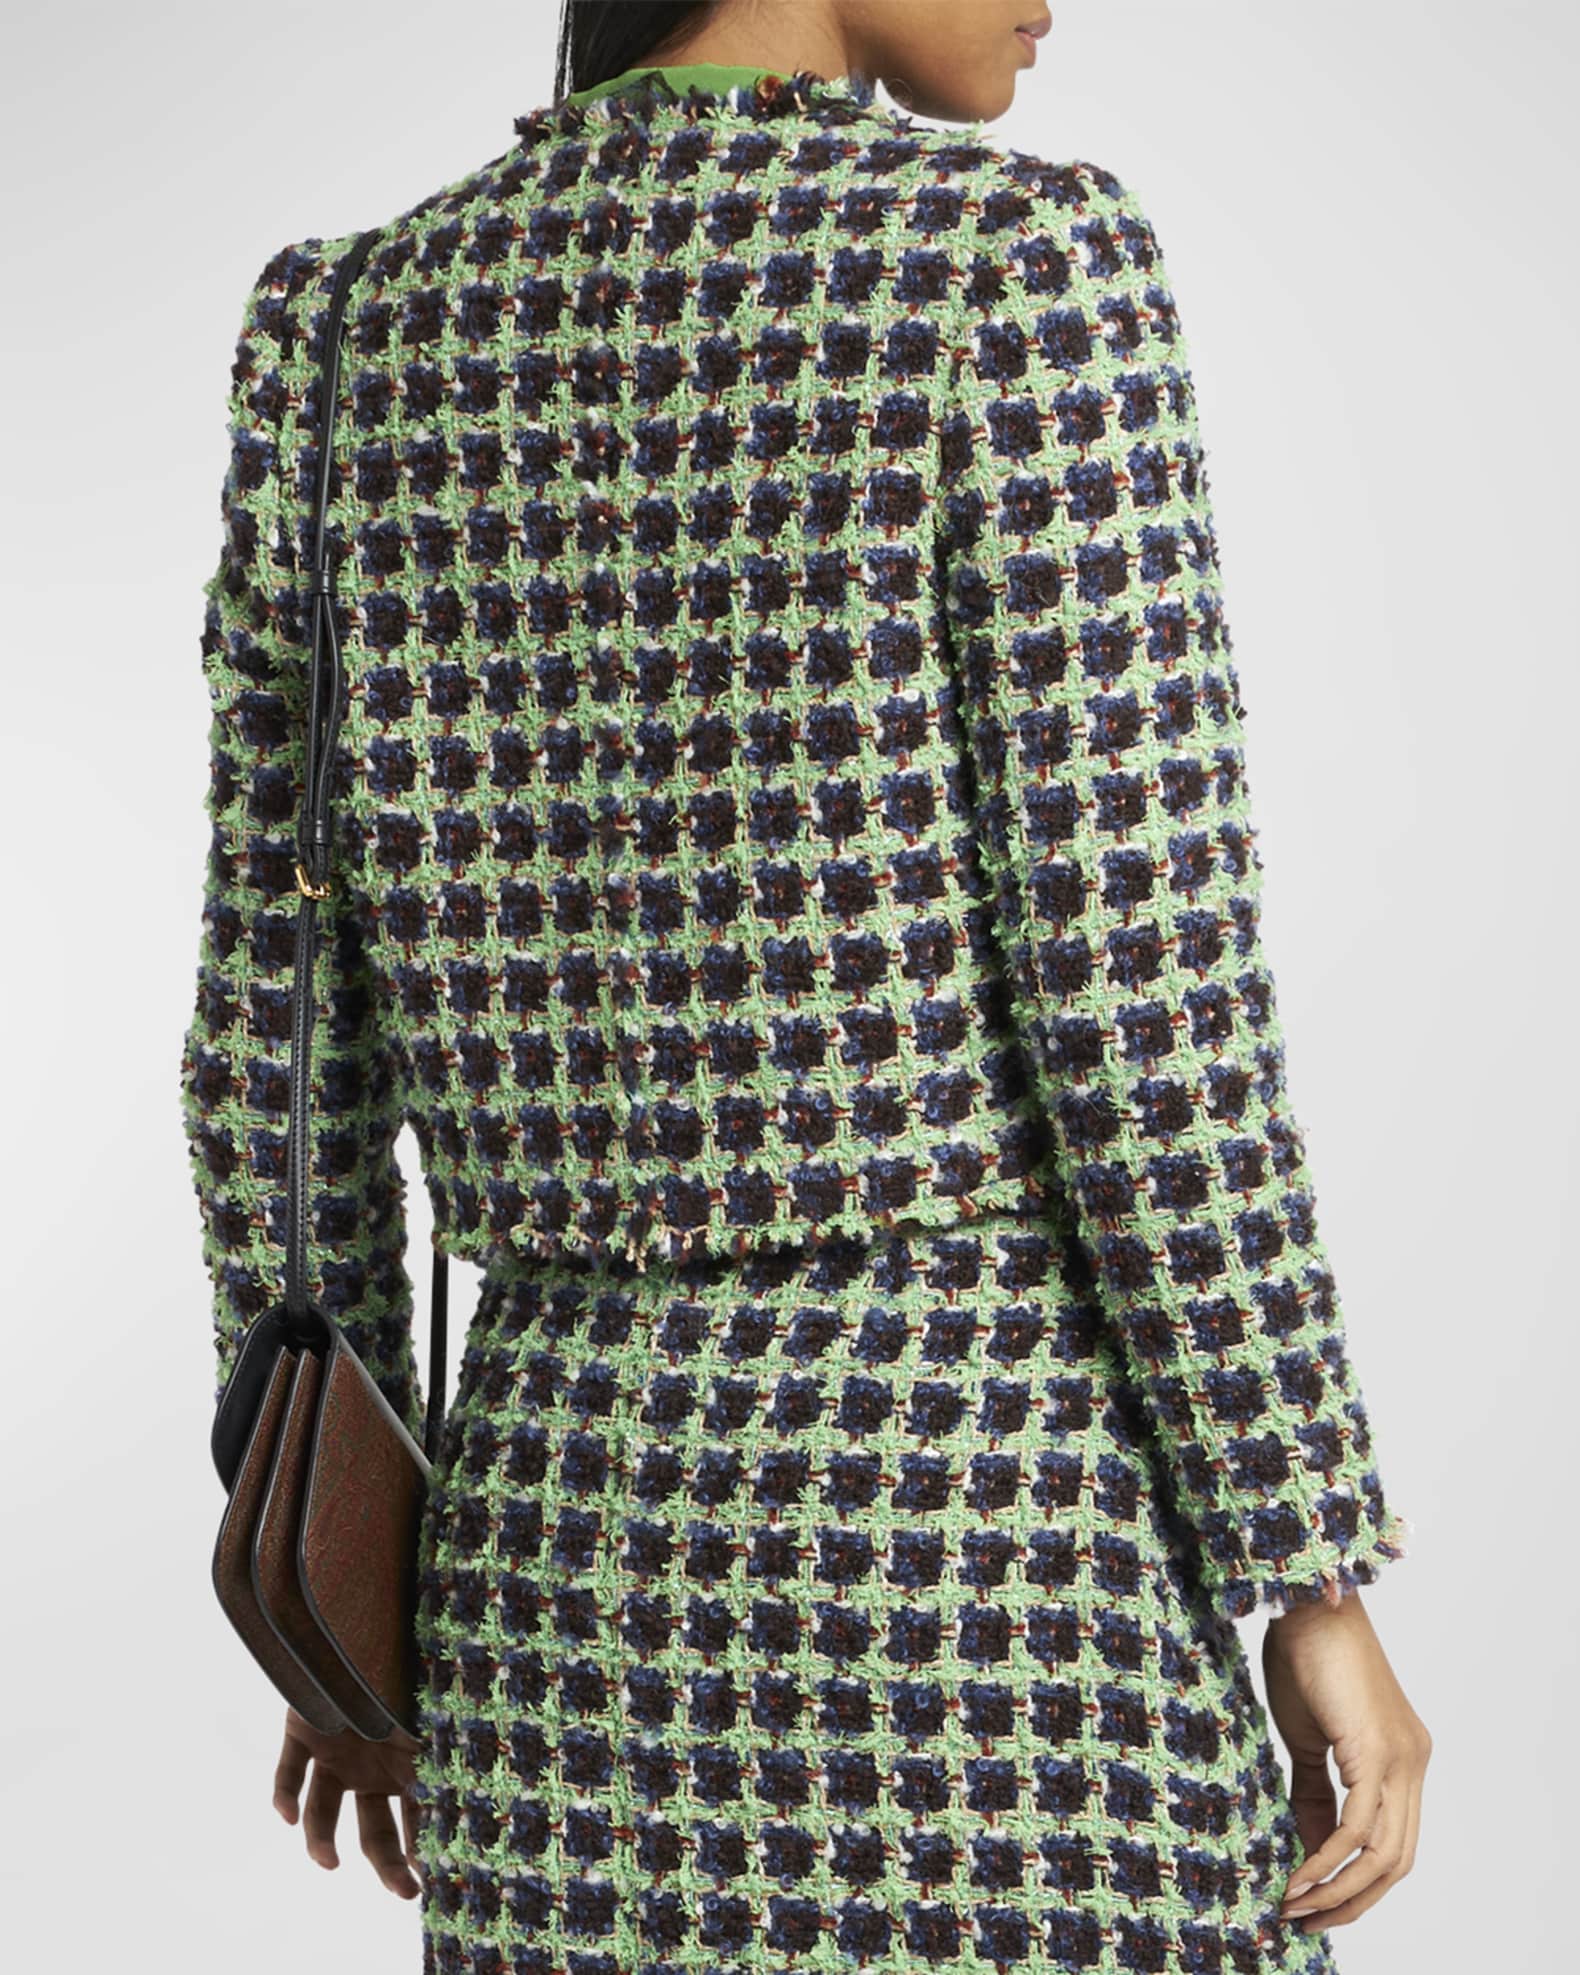 Etro Women's Tweed Check Jacket - Green - Size 6